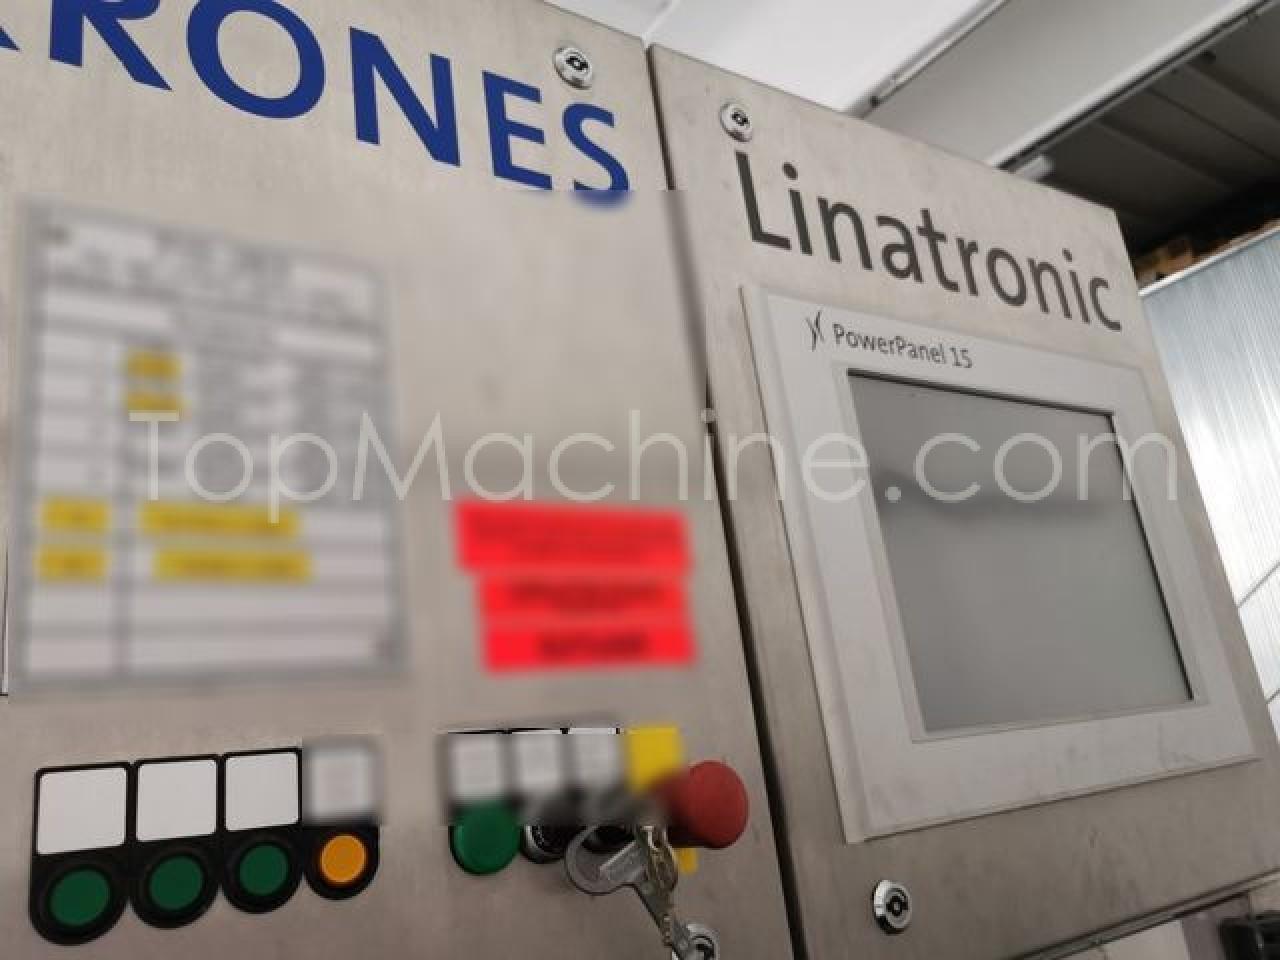 Used Krones Linatronic Beverages & Liquids Miscellaneous